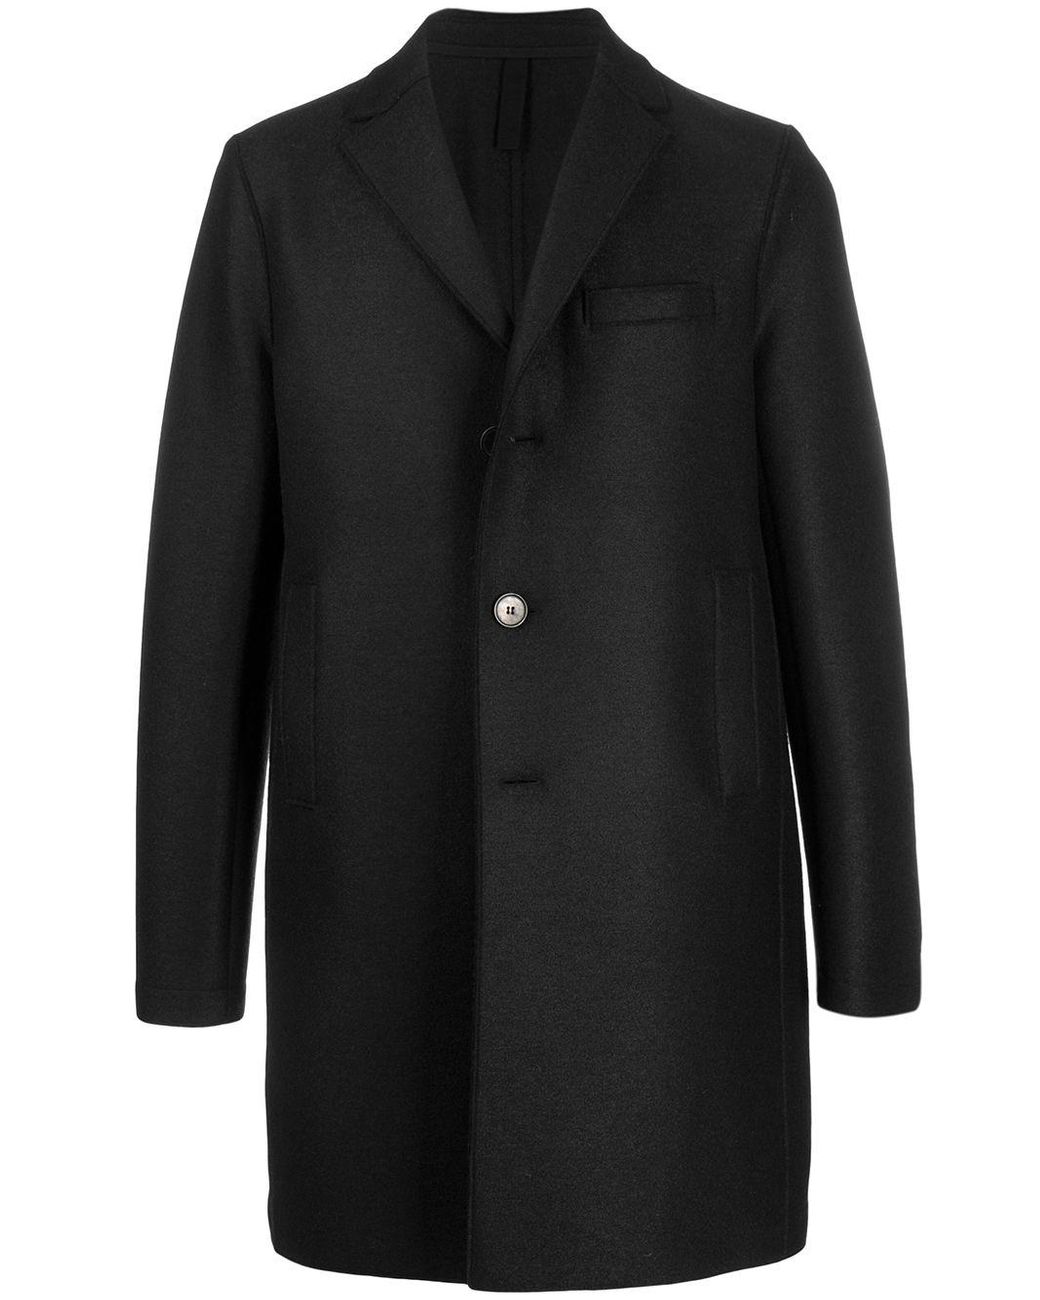 Harris Wharf London Wool Midi Single Breasted Coat in Black for Men - Lyst